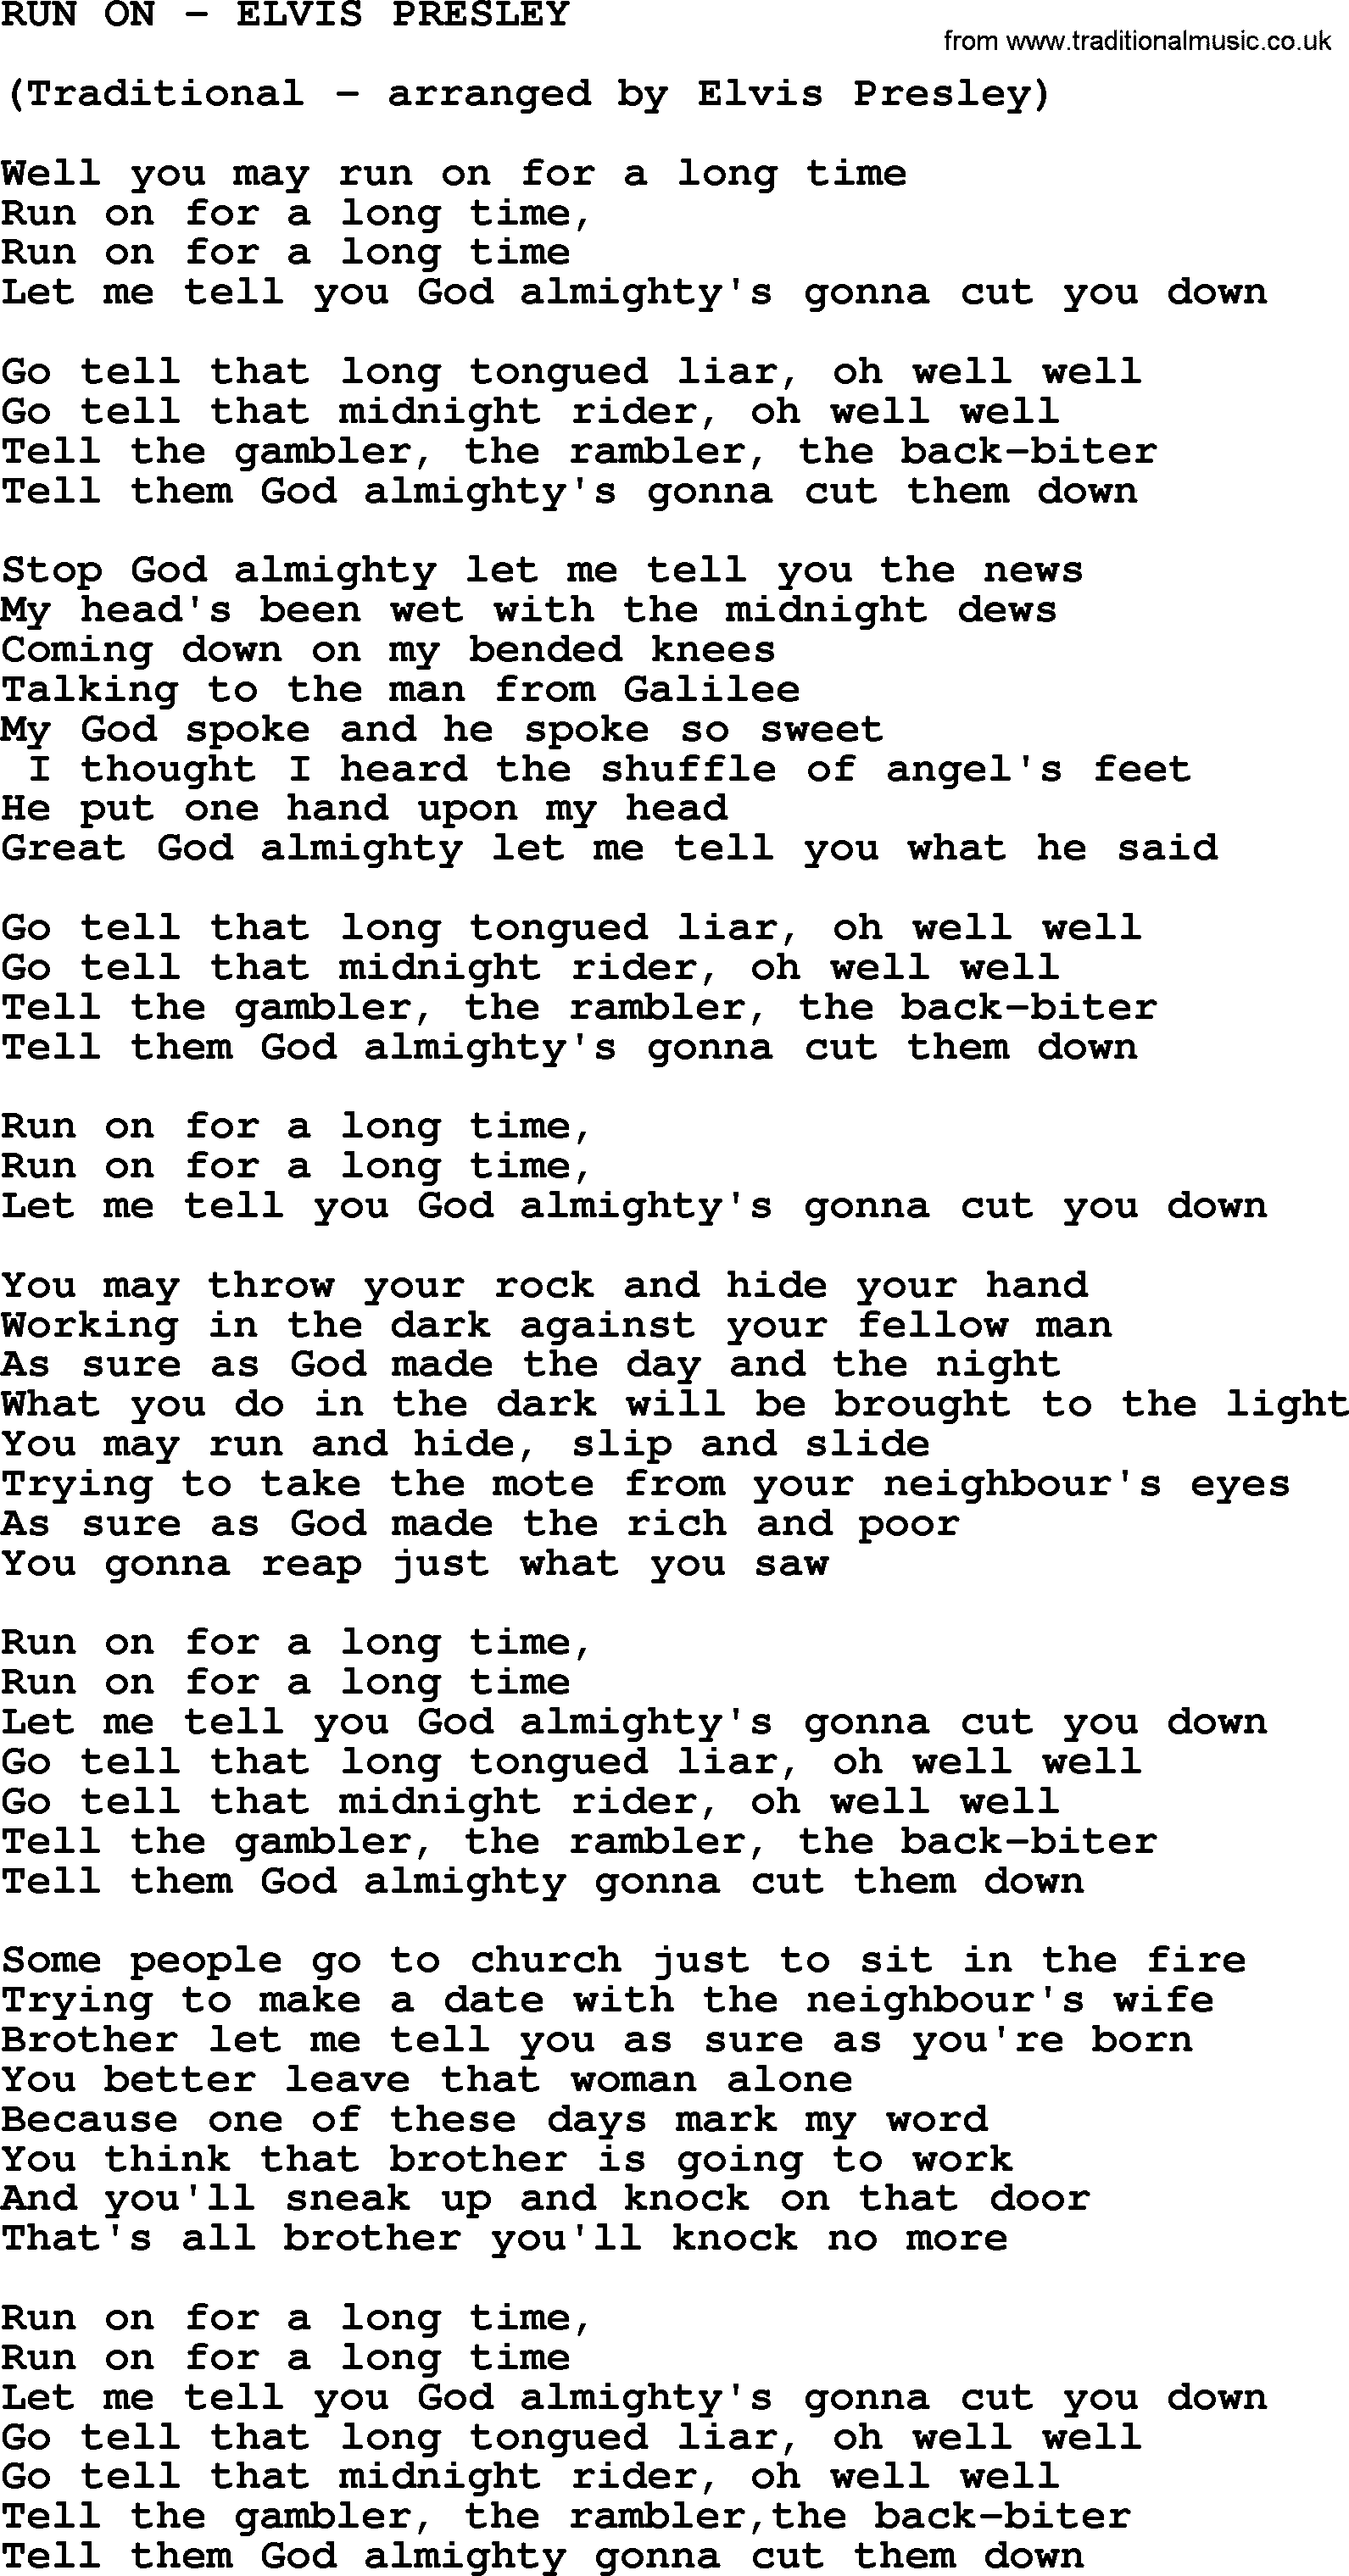 Elvis Presley song: Run On-Elvis Presley-.txt lyrics and chords